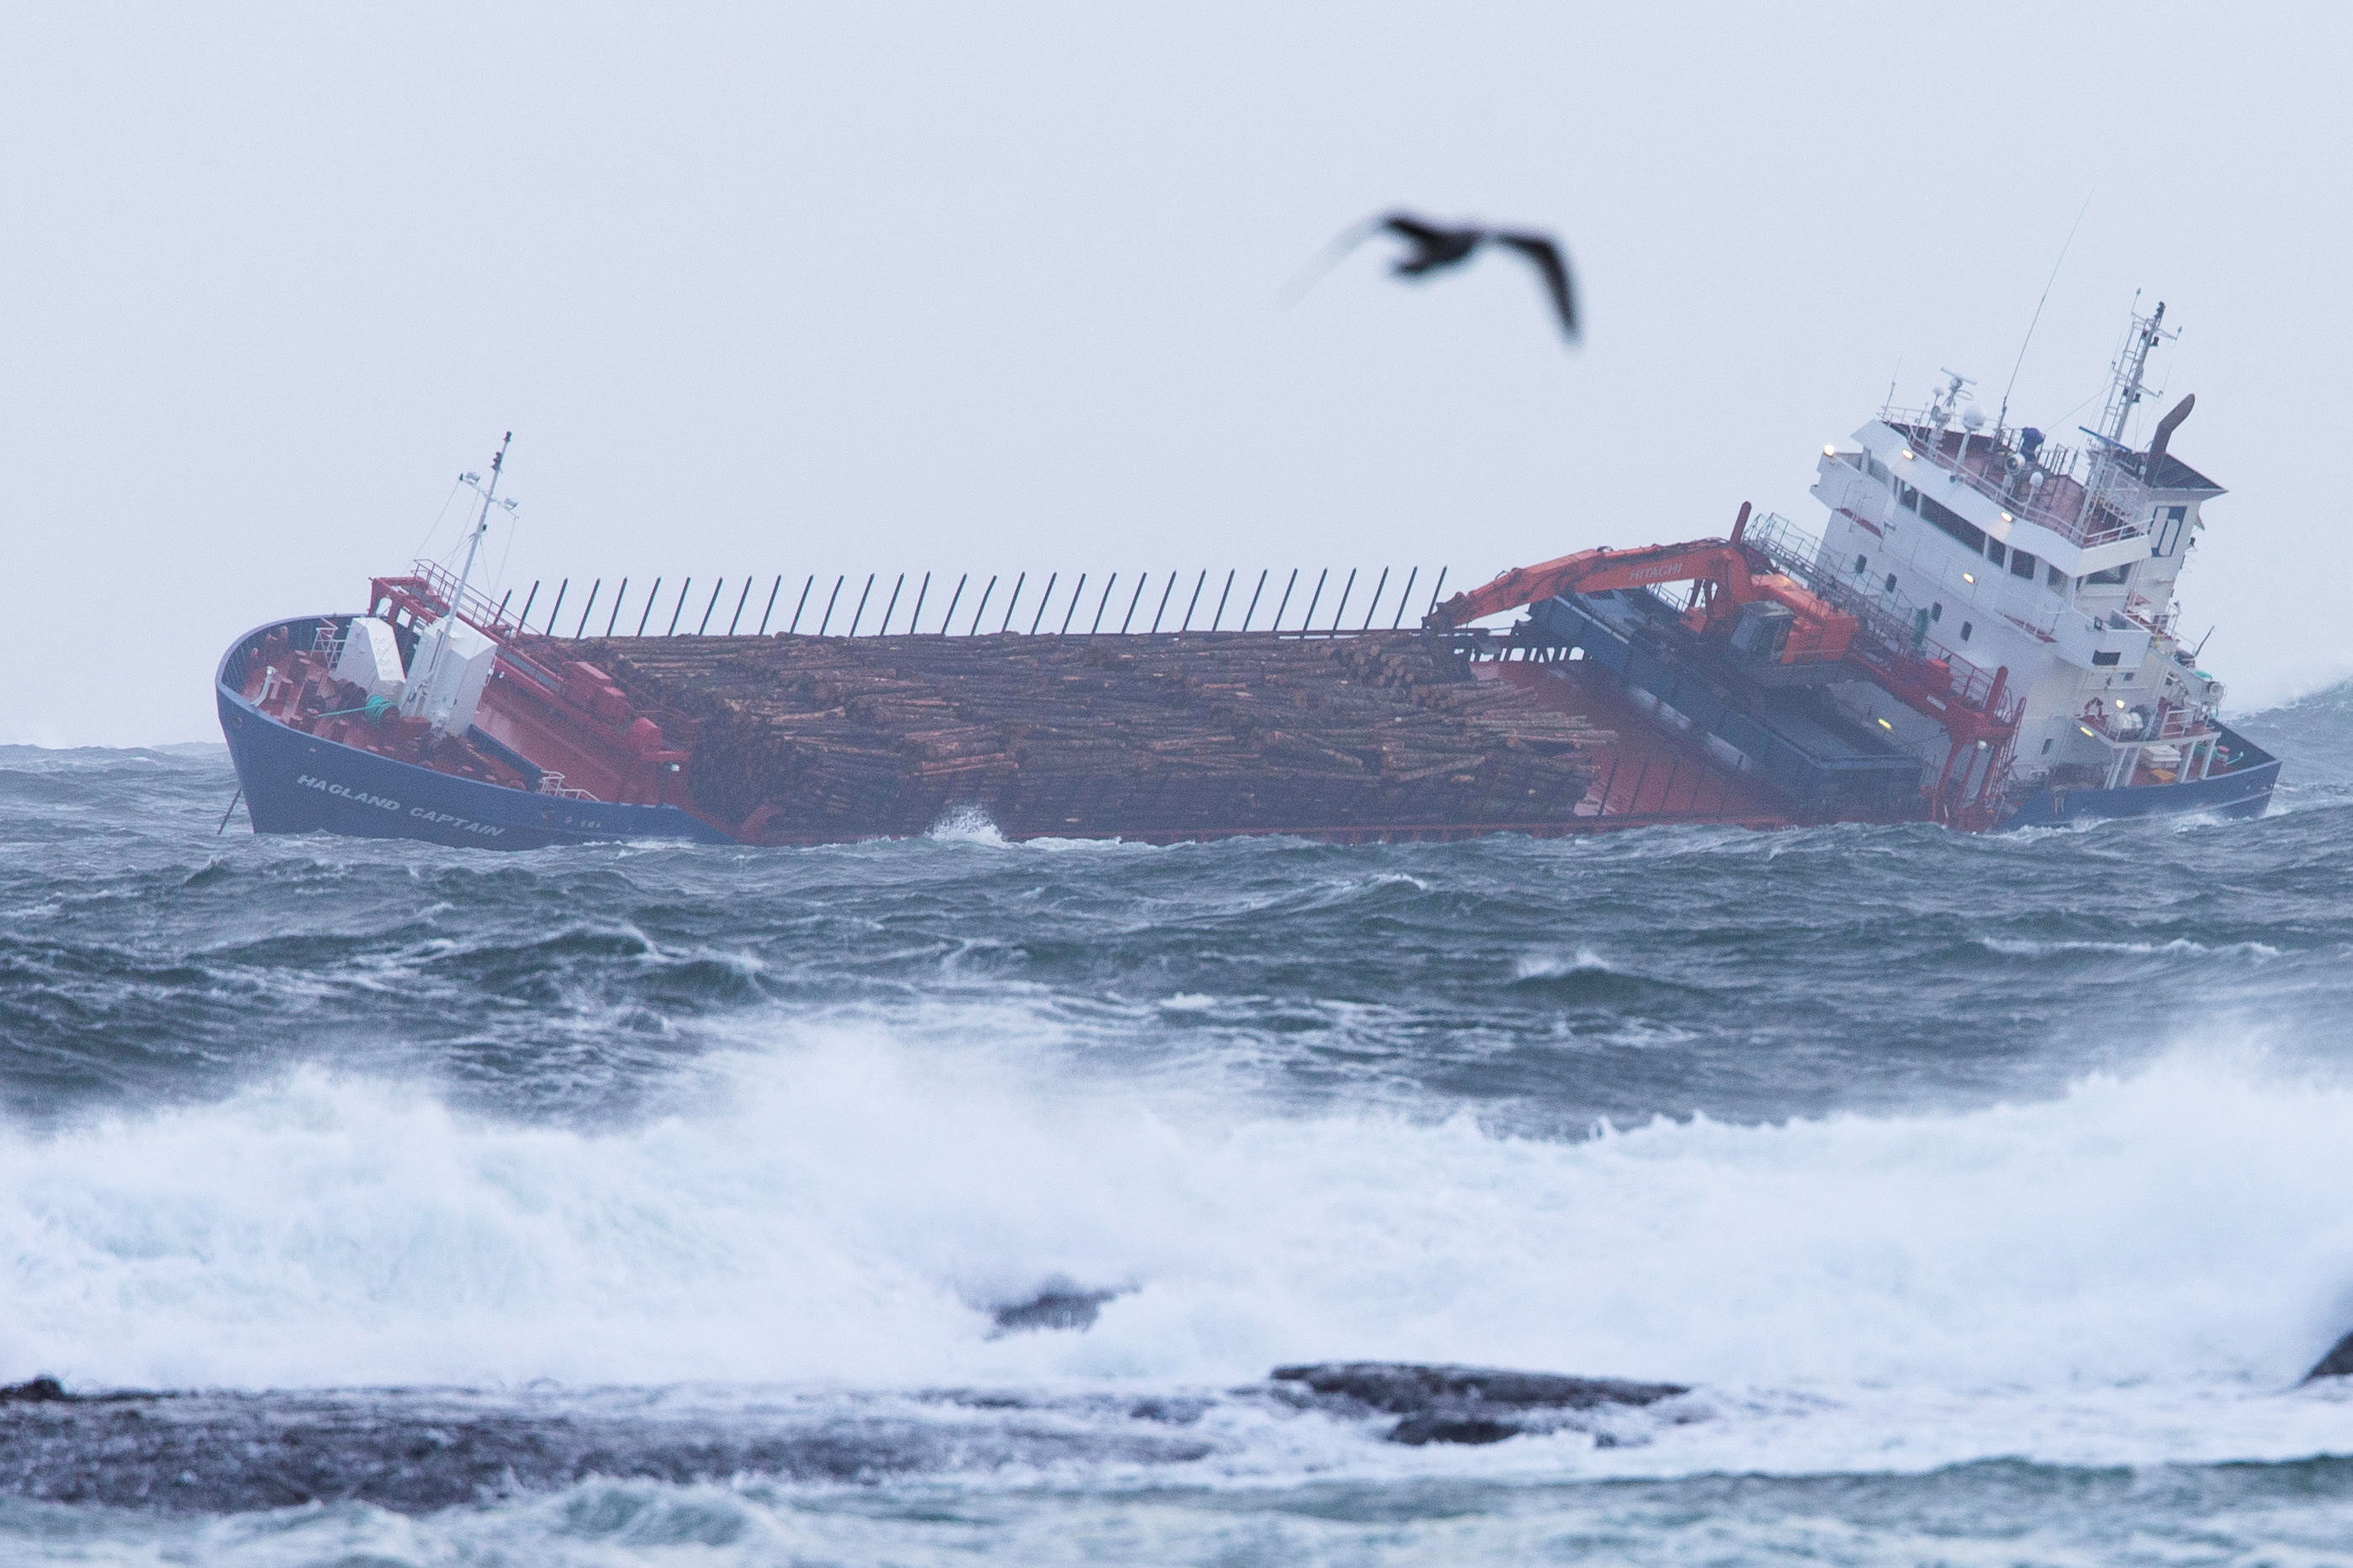 Crucero averiado en costa de Noruega logró arrancar tres de sus motores (FOTOS)